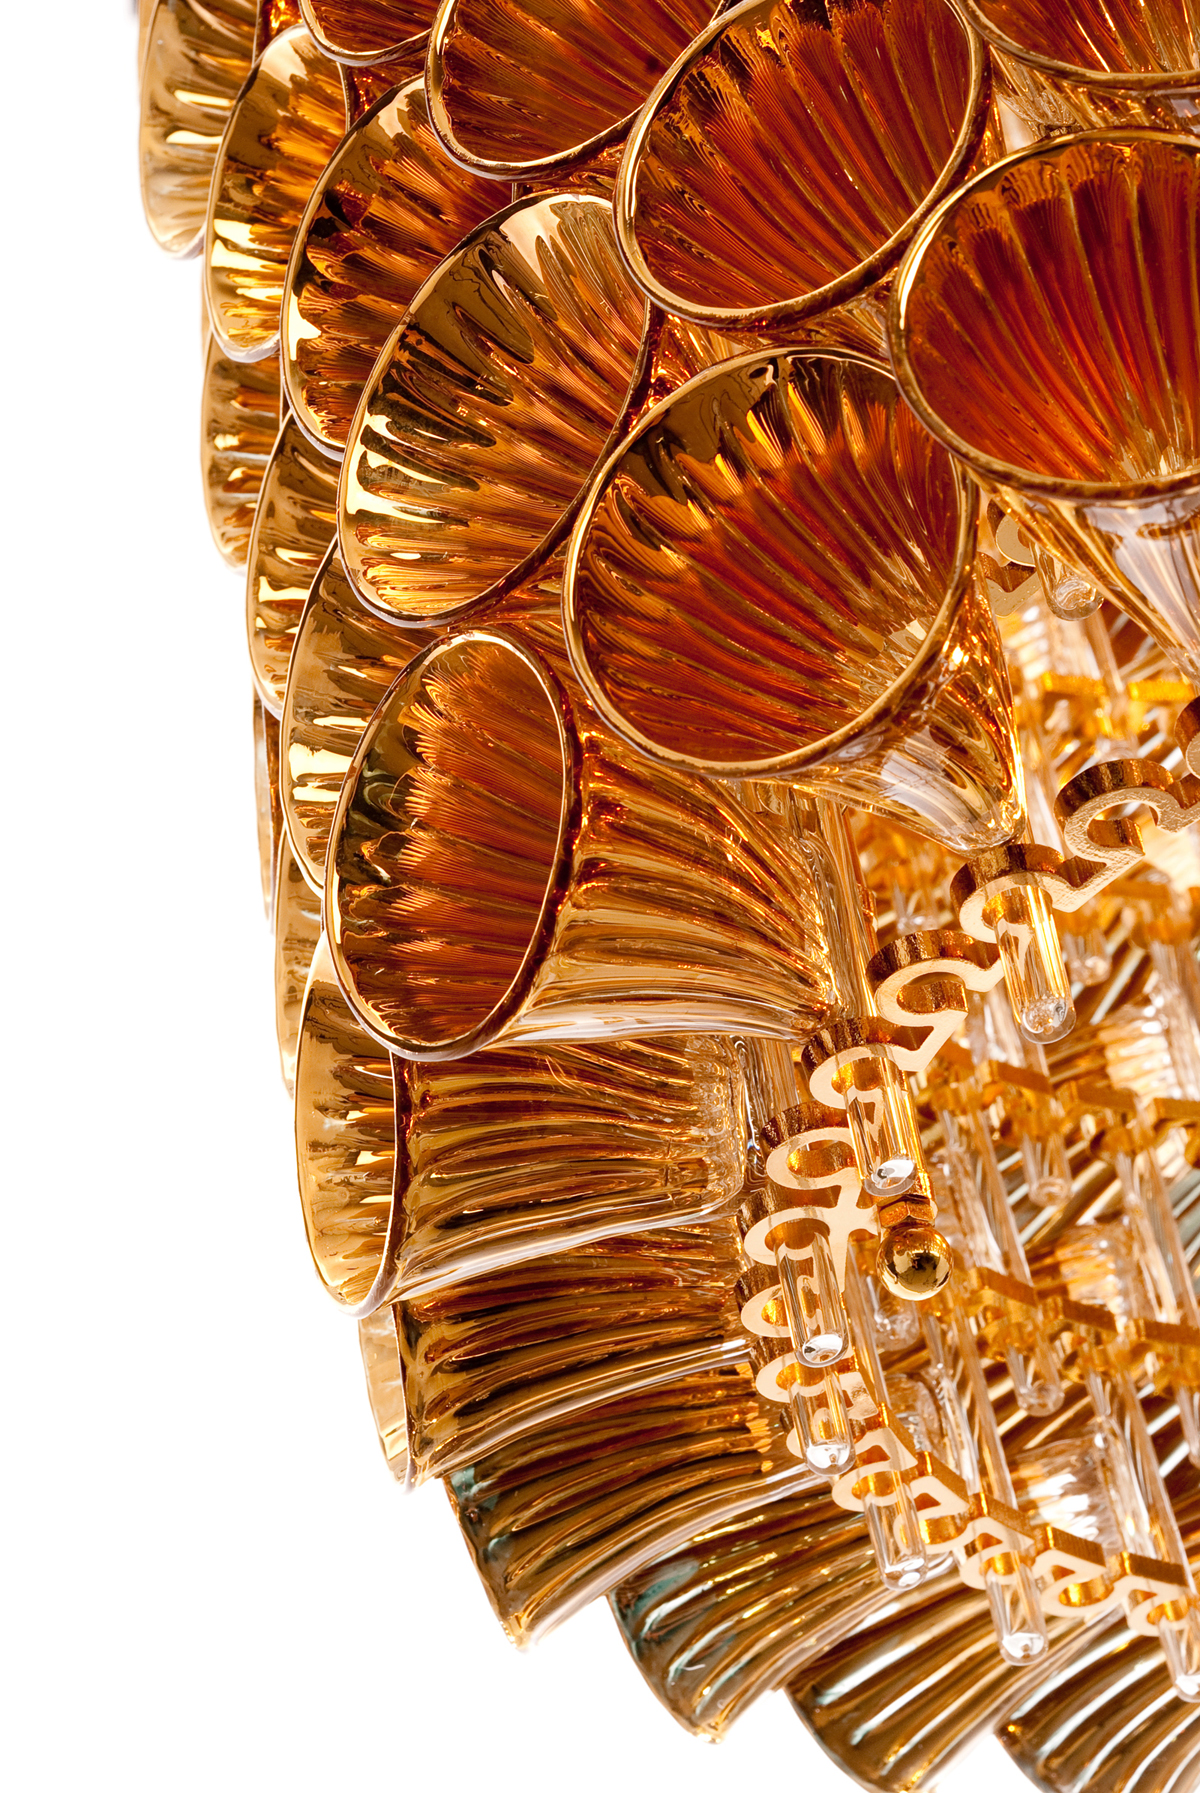 corail-suspension-gold-veronese-maurizio-galante-tal-lancman-3.jpg